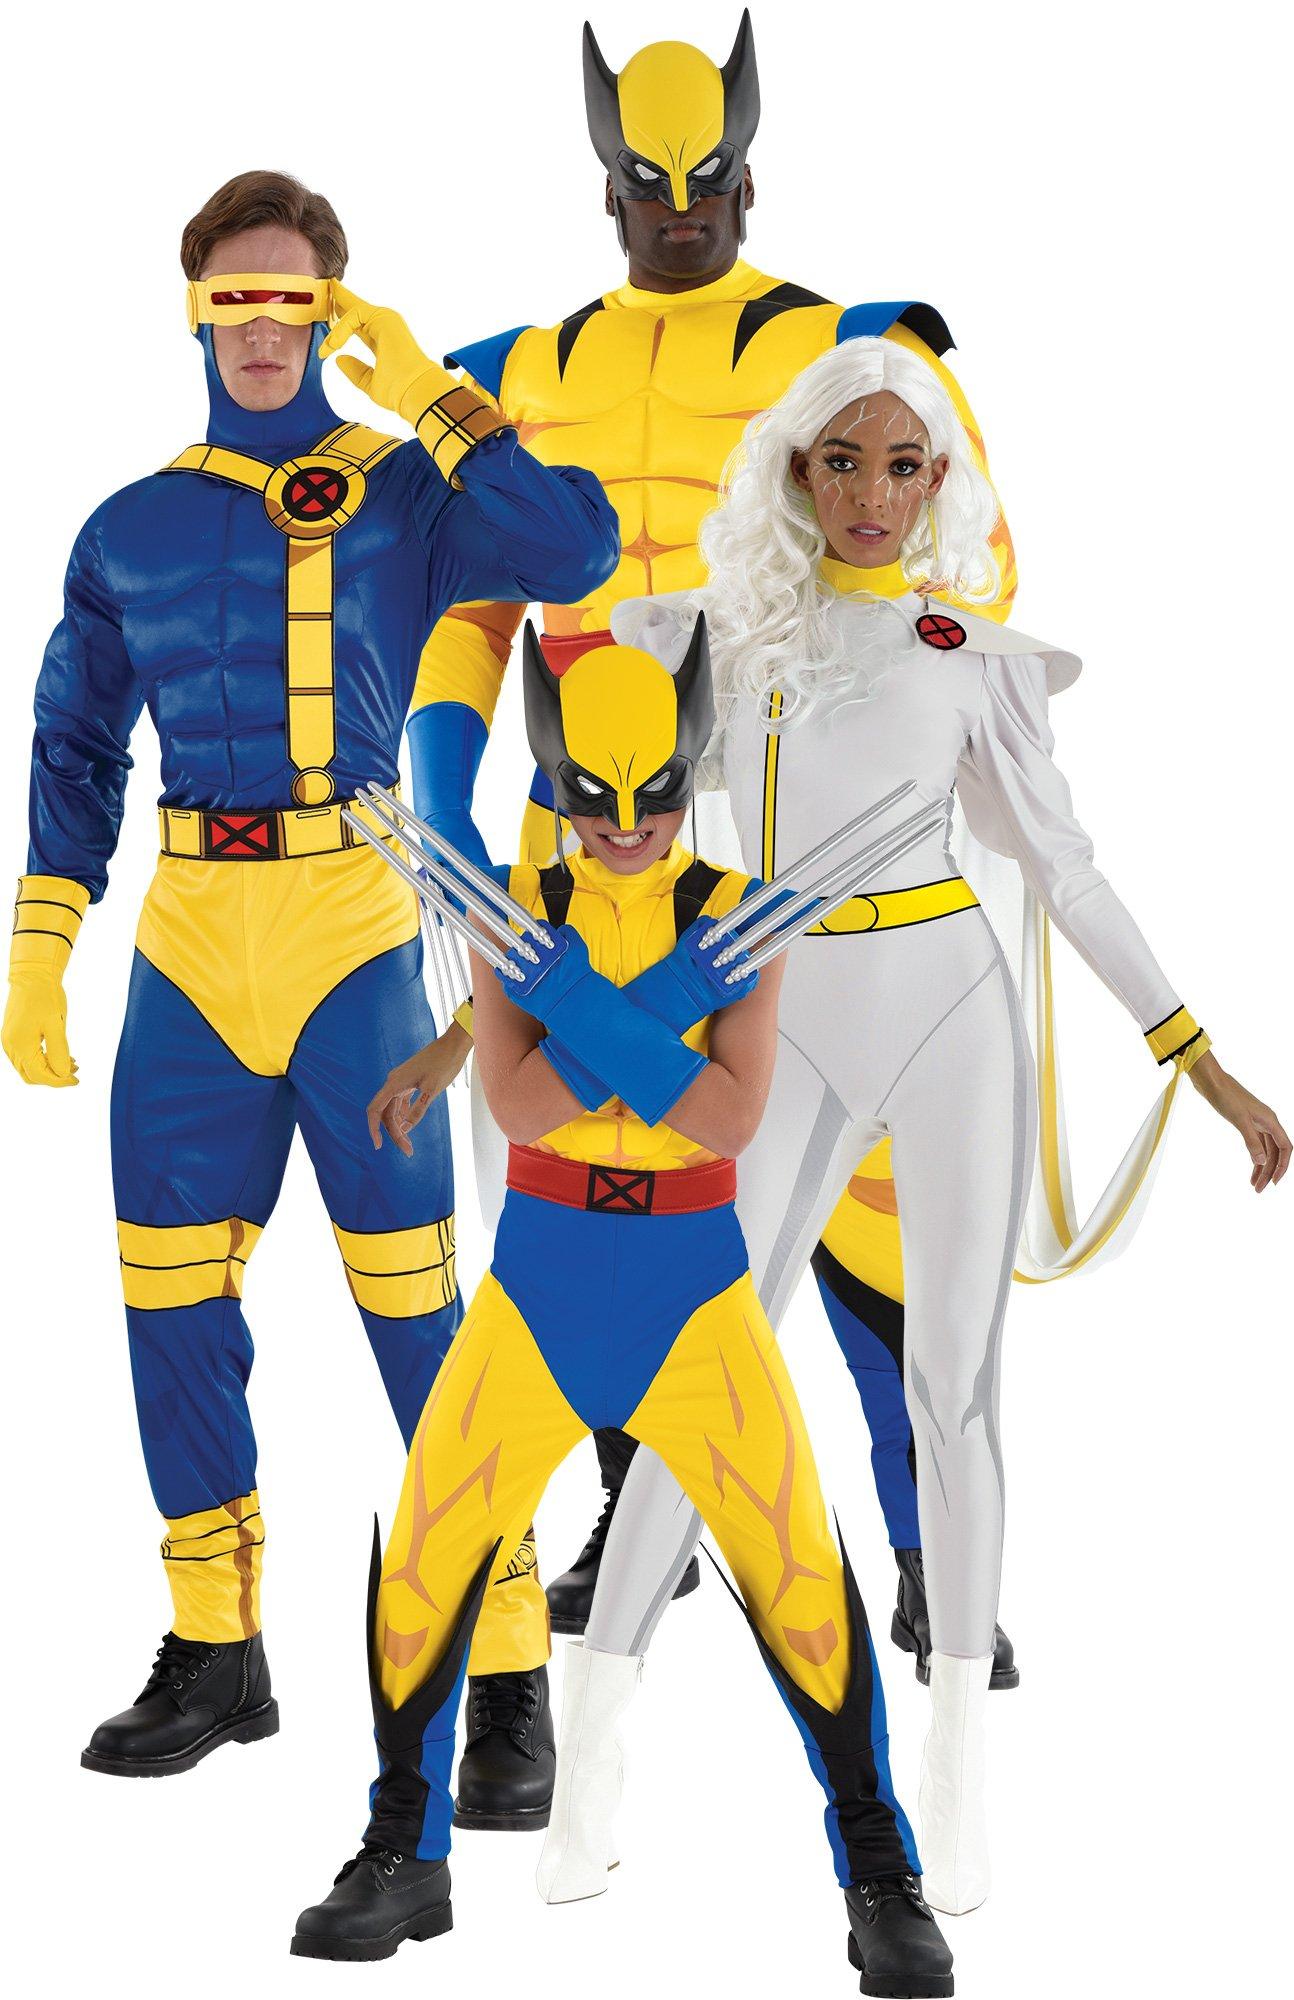 X-Men Family Costumes